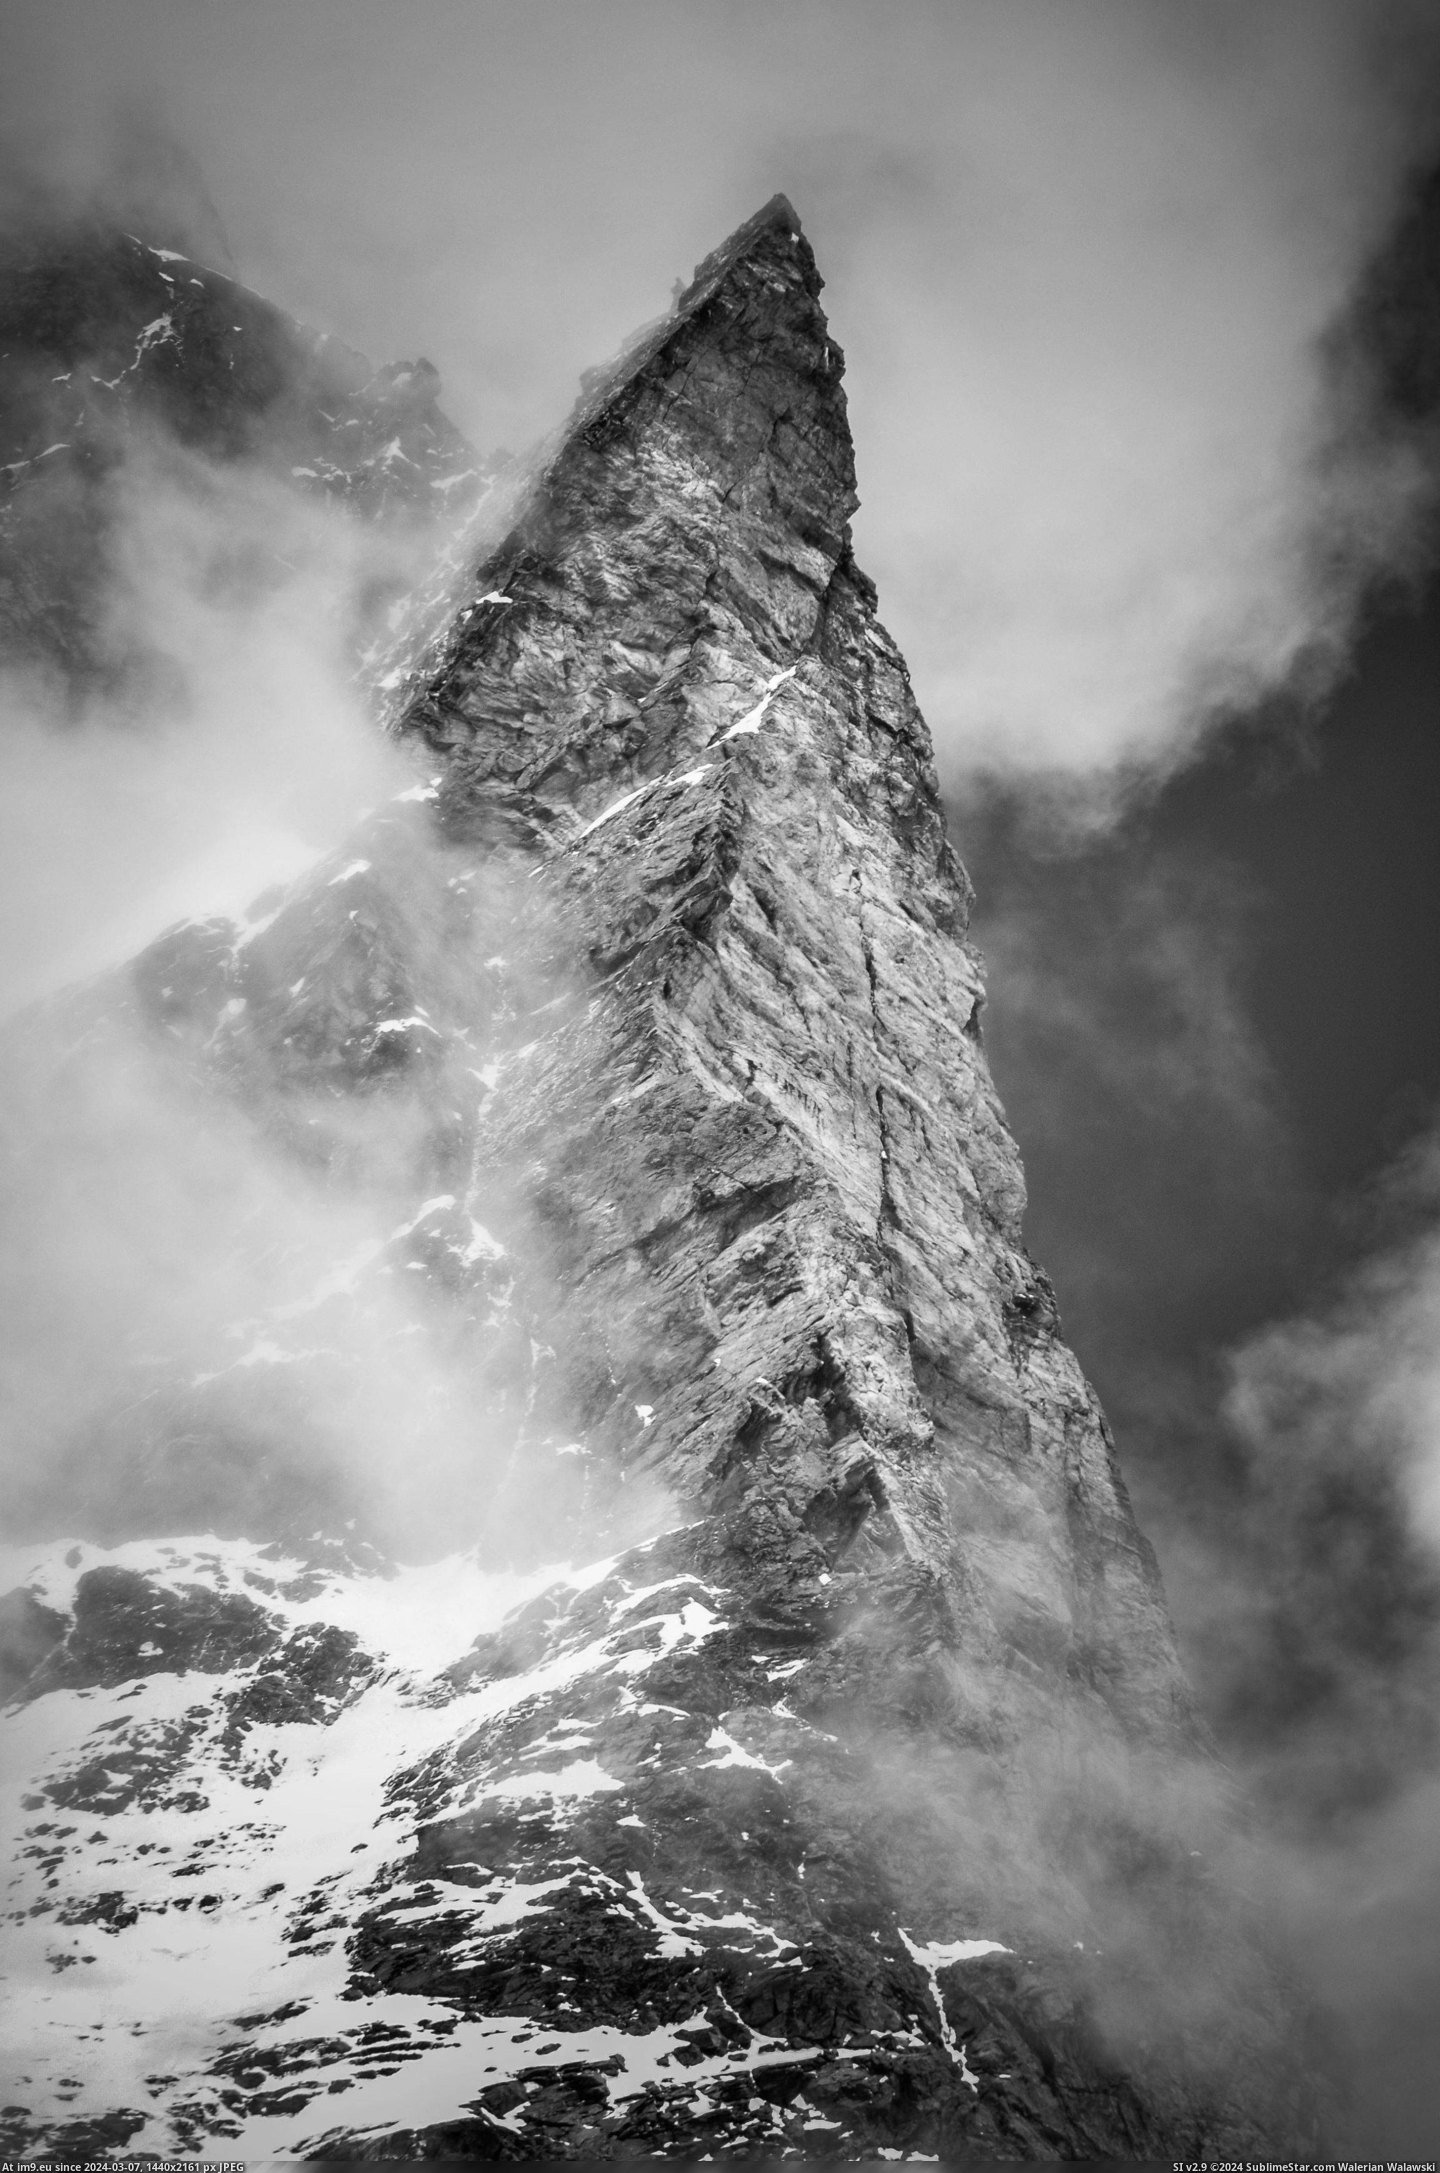  #Matterhorn  [Pics] The Matterhorn Pic. (Изображение из альбом My r/PICS favs))